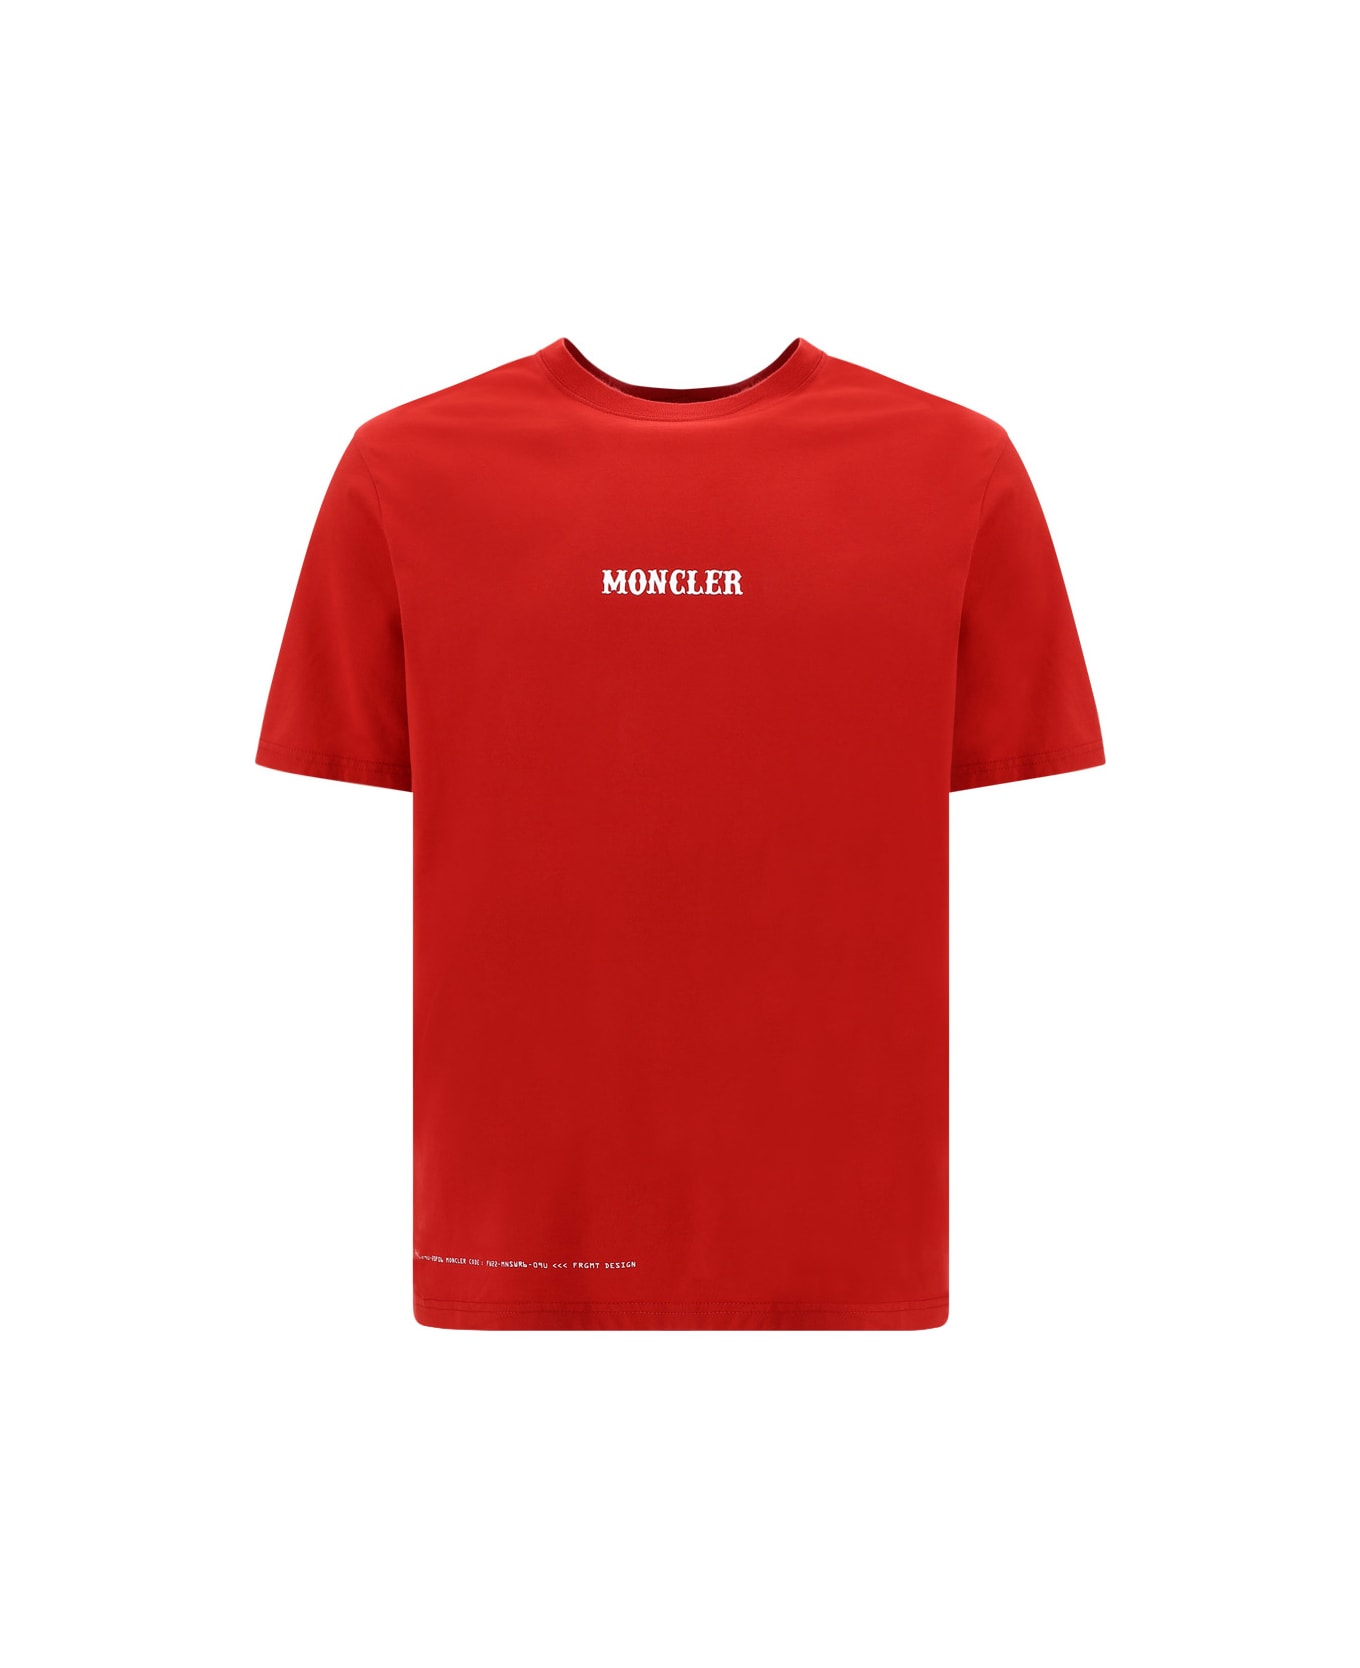 Moncler Genius Circus T-shirt - RED